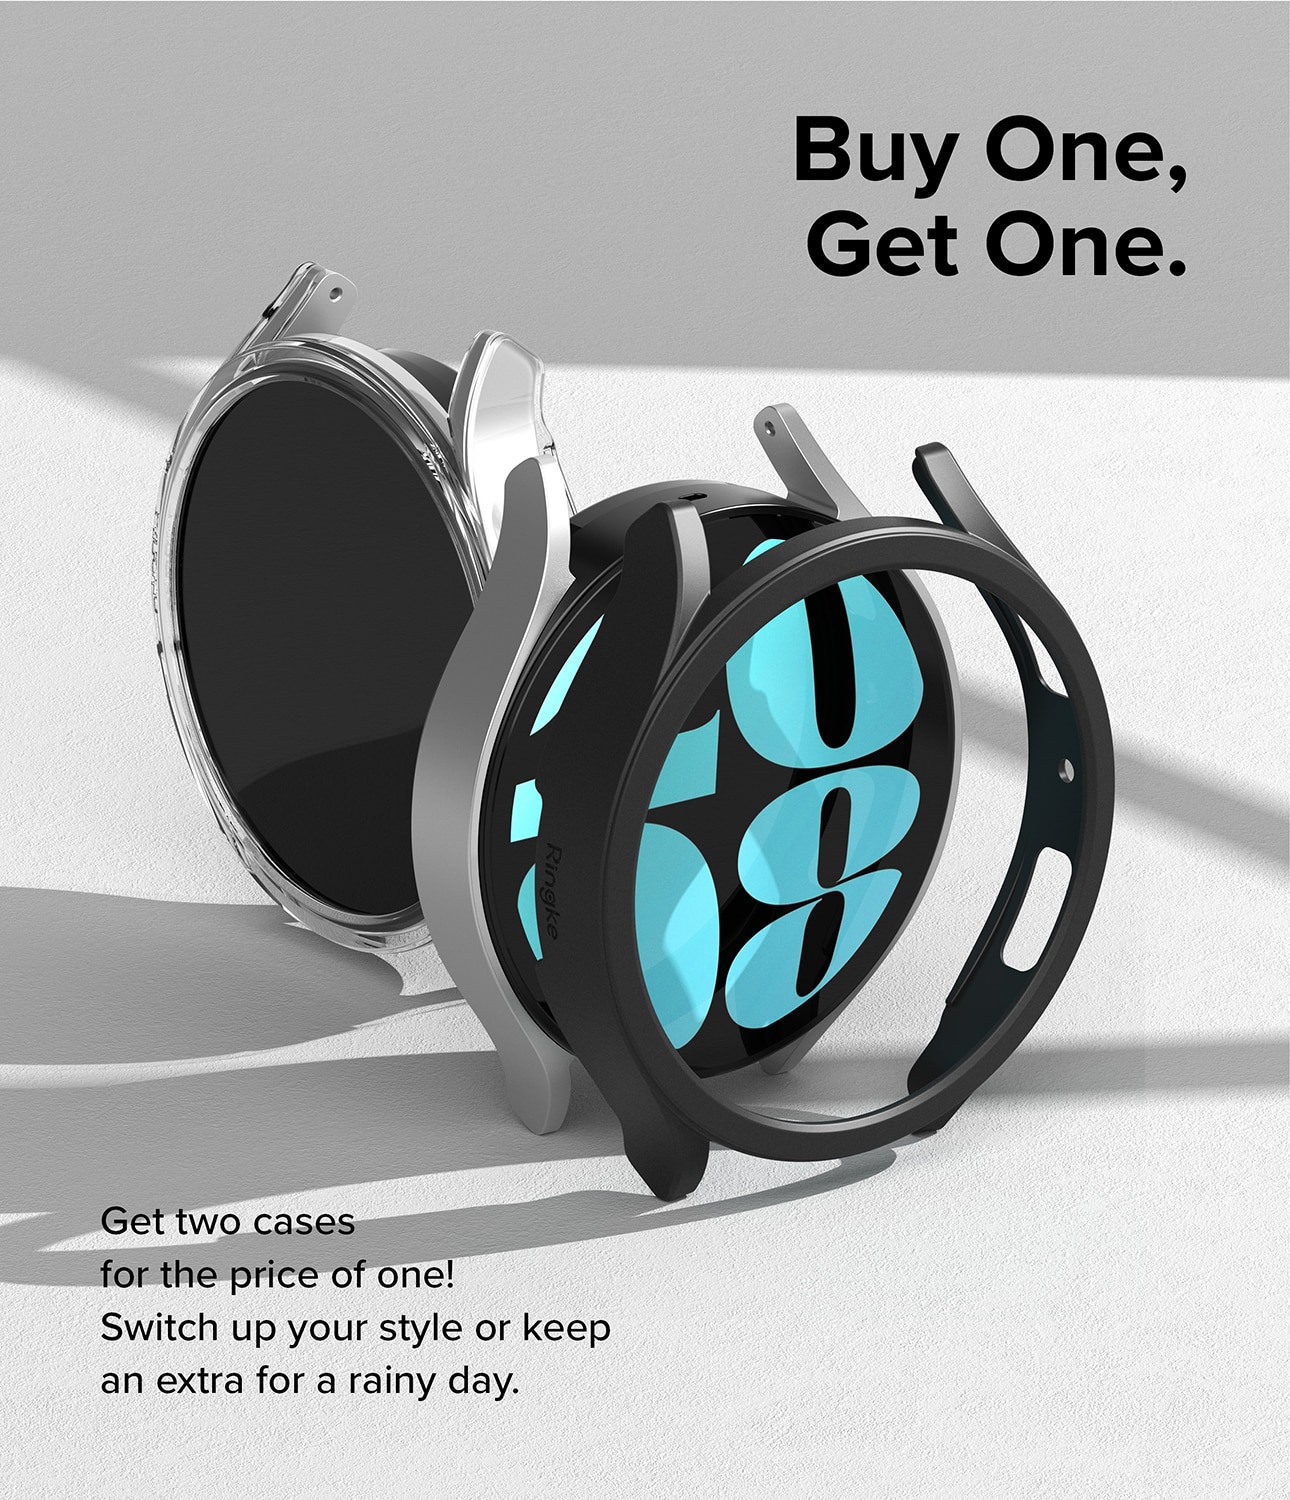 Funda Slim (2 piezas) Galaxy Watch 6 44mm Matte Black & Clear